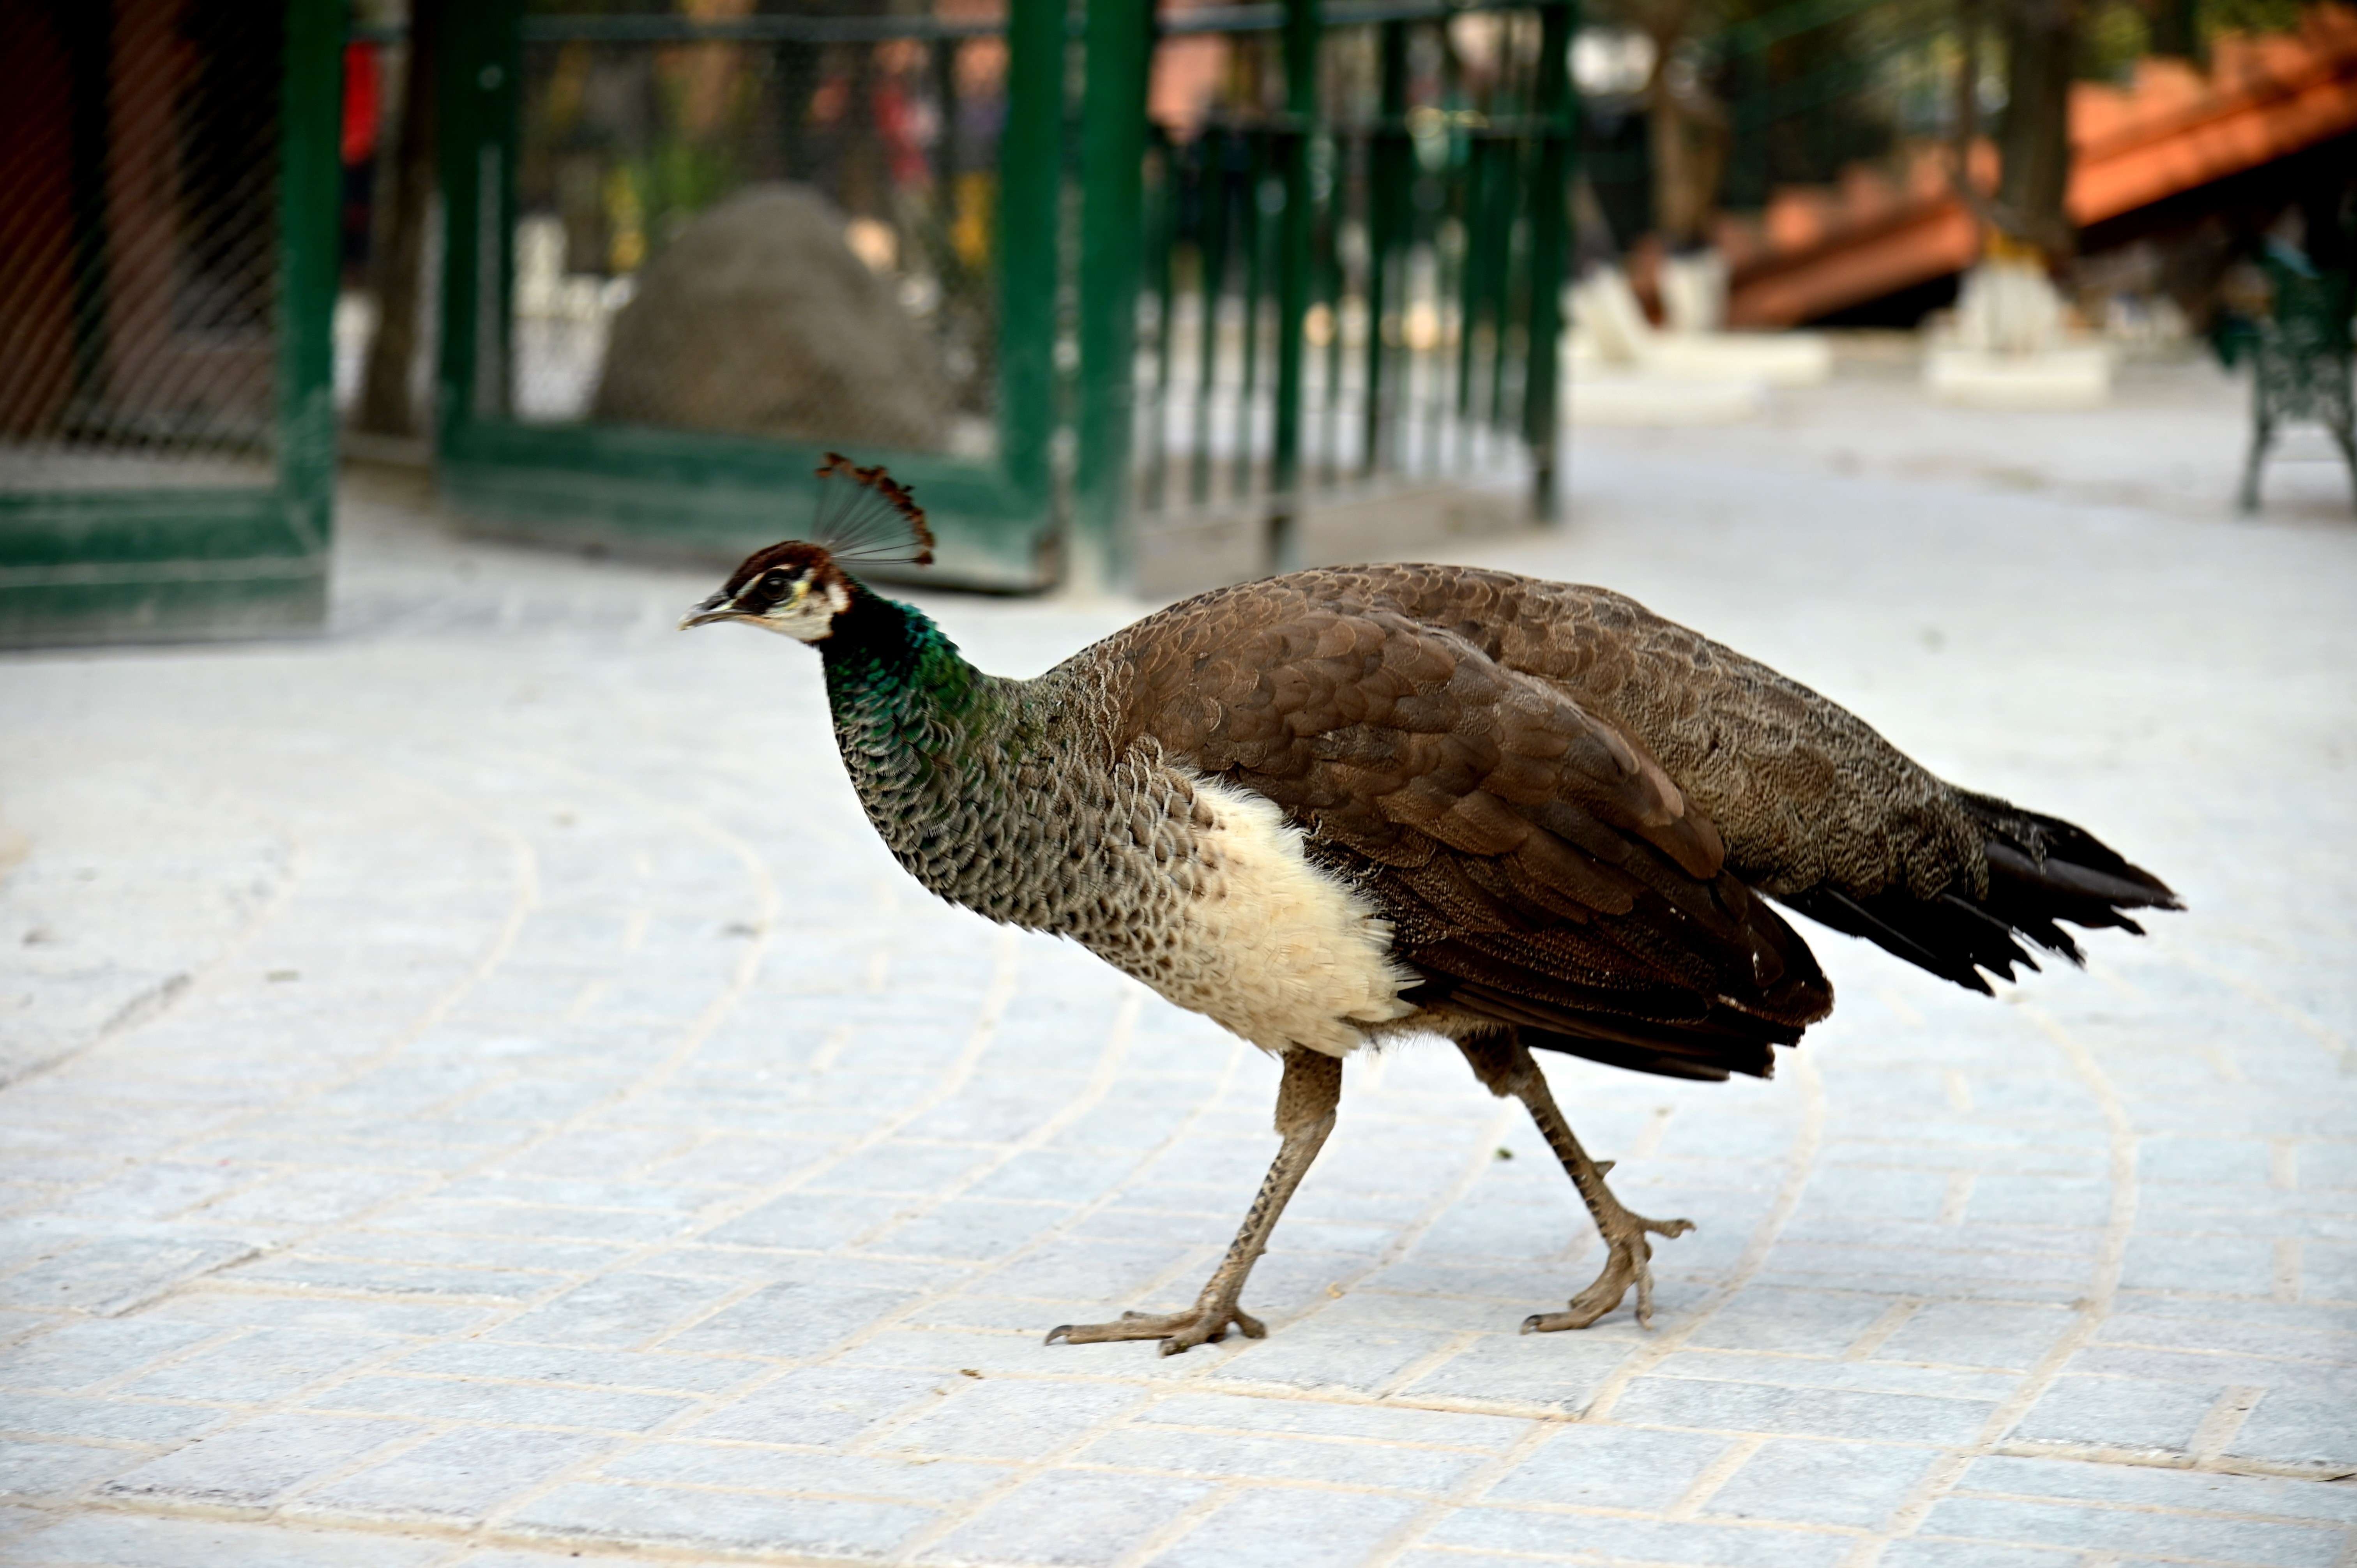 A peacock in Birds Aviary